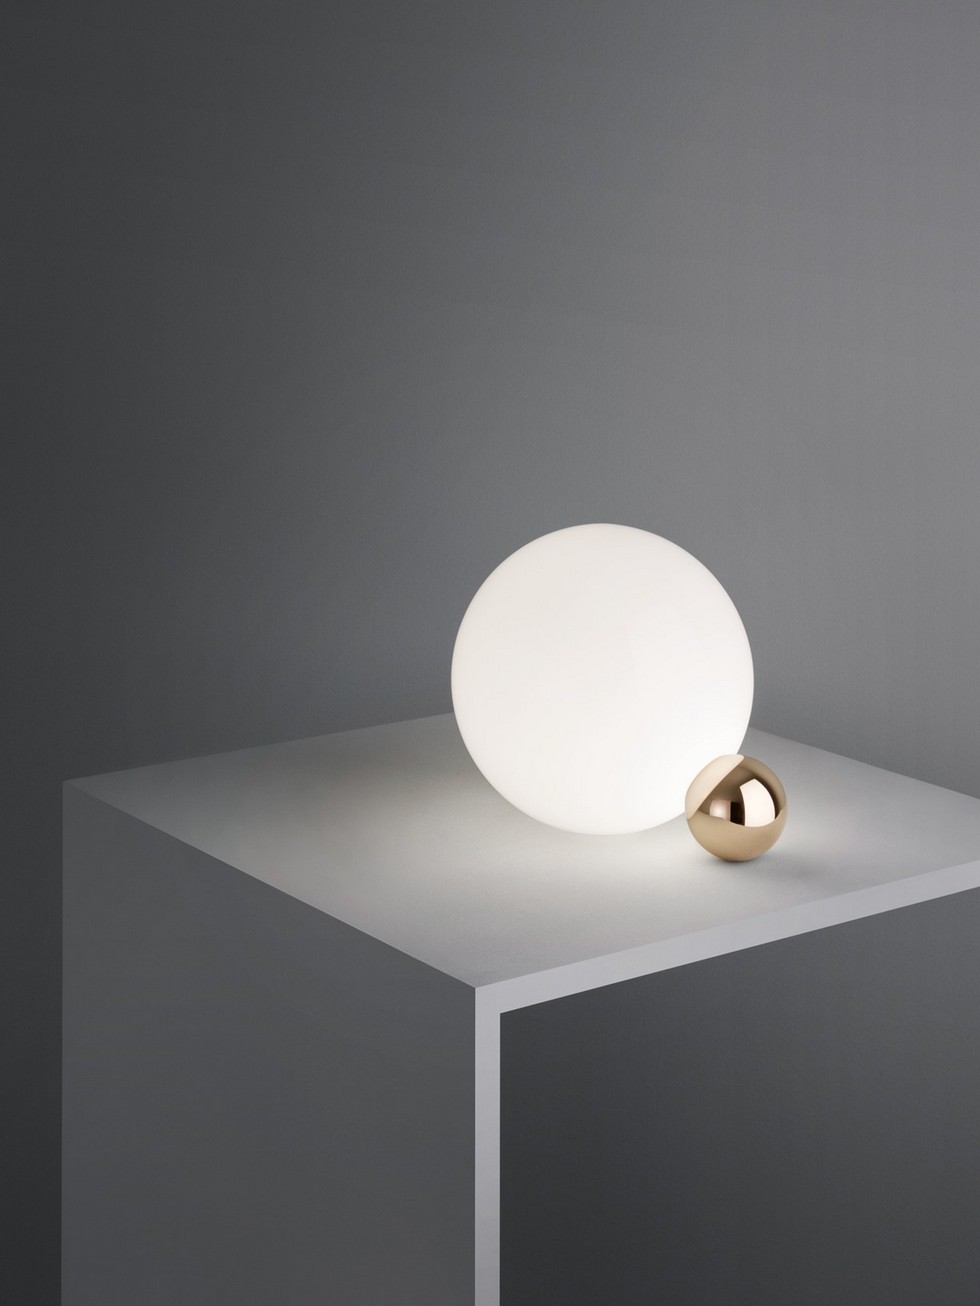 Milan Furniture Fair 2015 contemporary lighting trends to remember-Flos at Euroluce 2015(5)